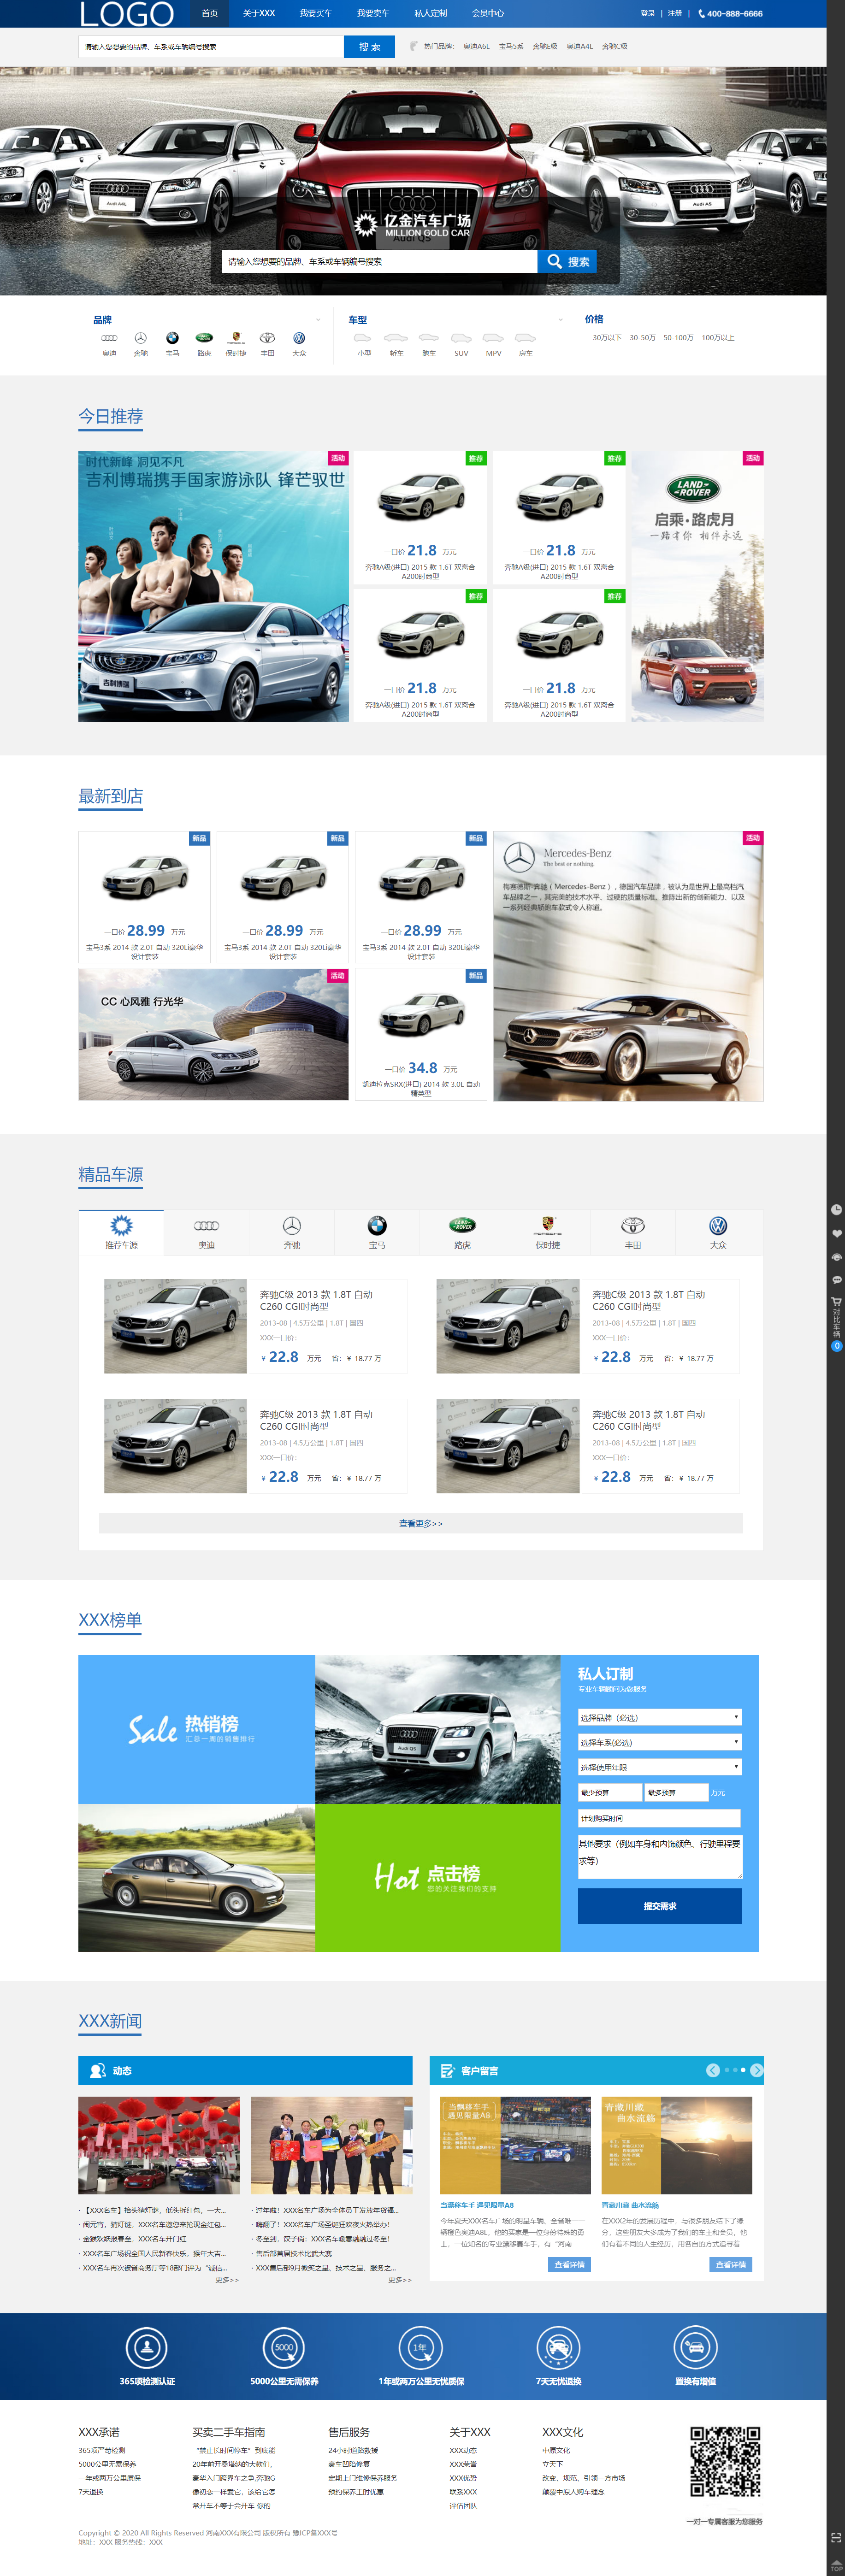 HTML5蓝色宽屏样式二手汽车交易企业网站模板代码下载